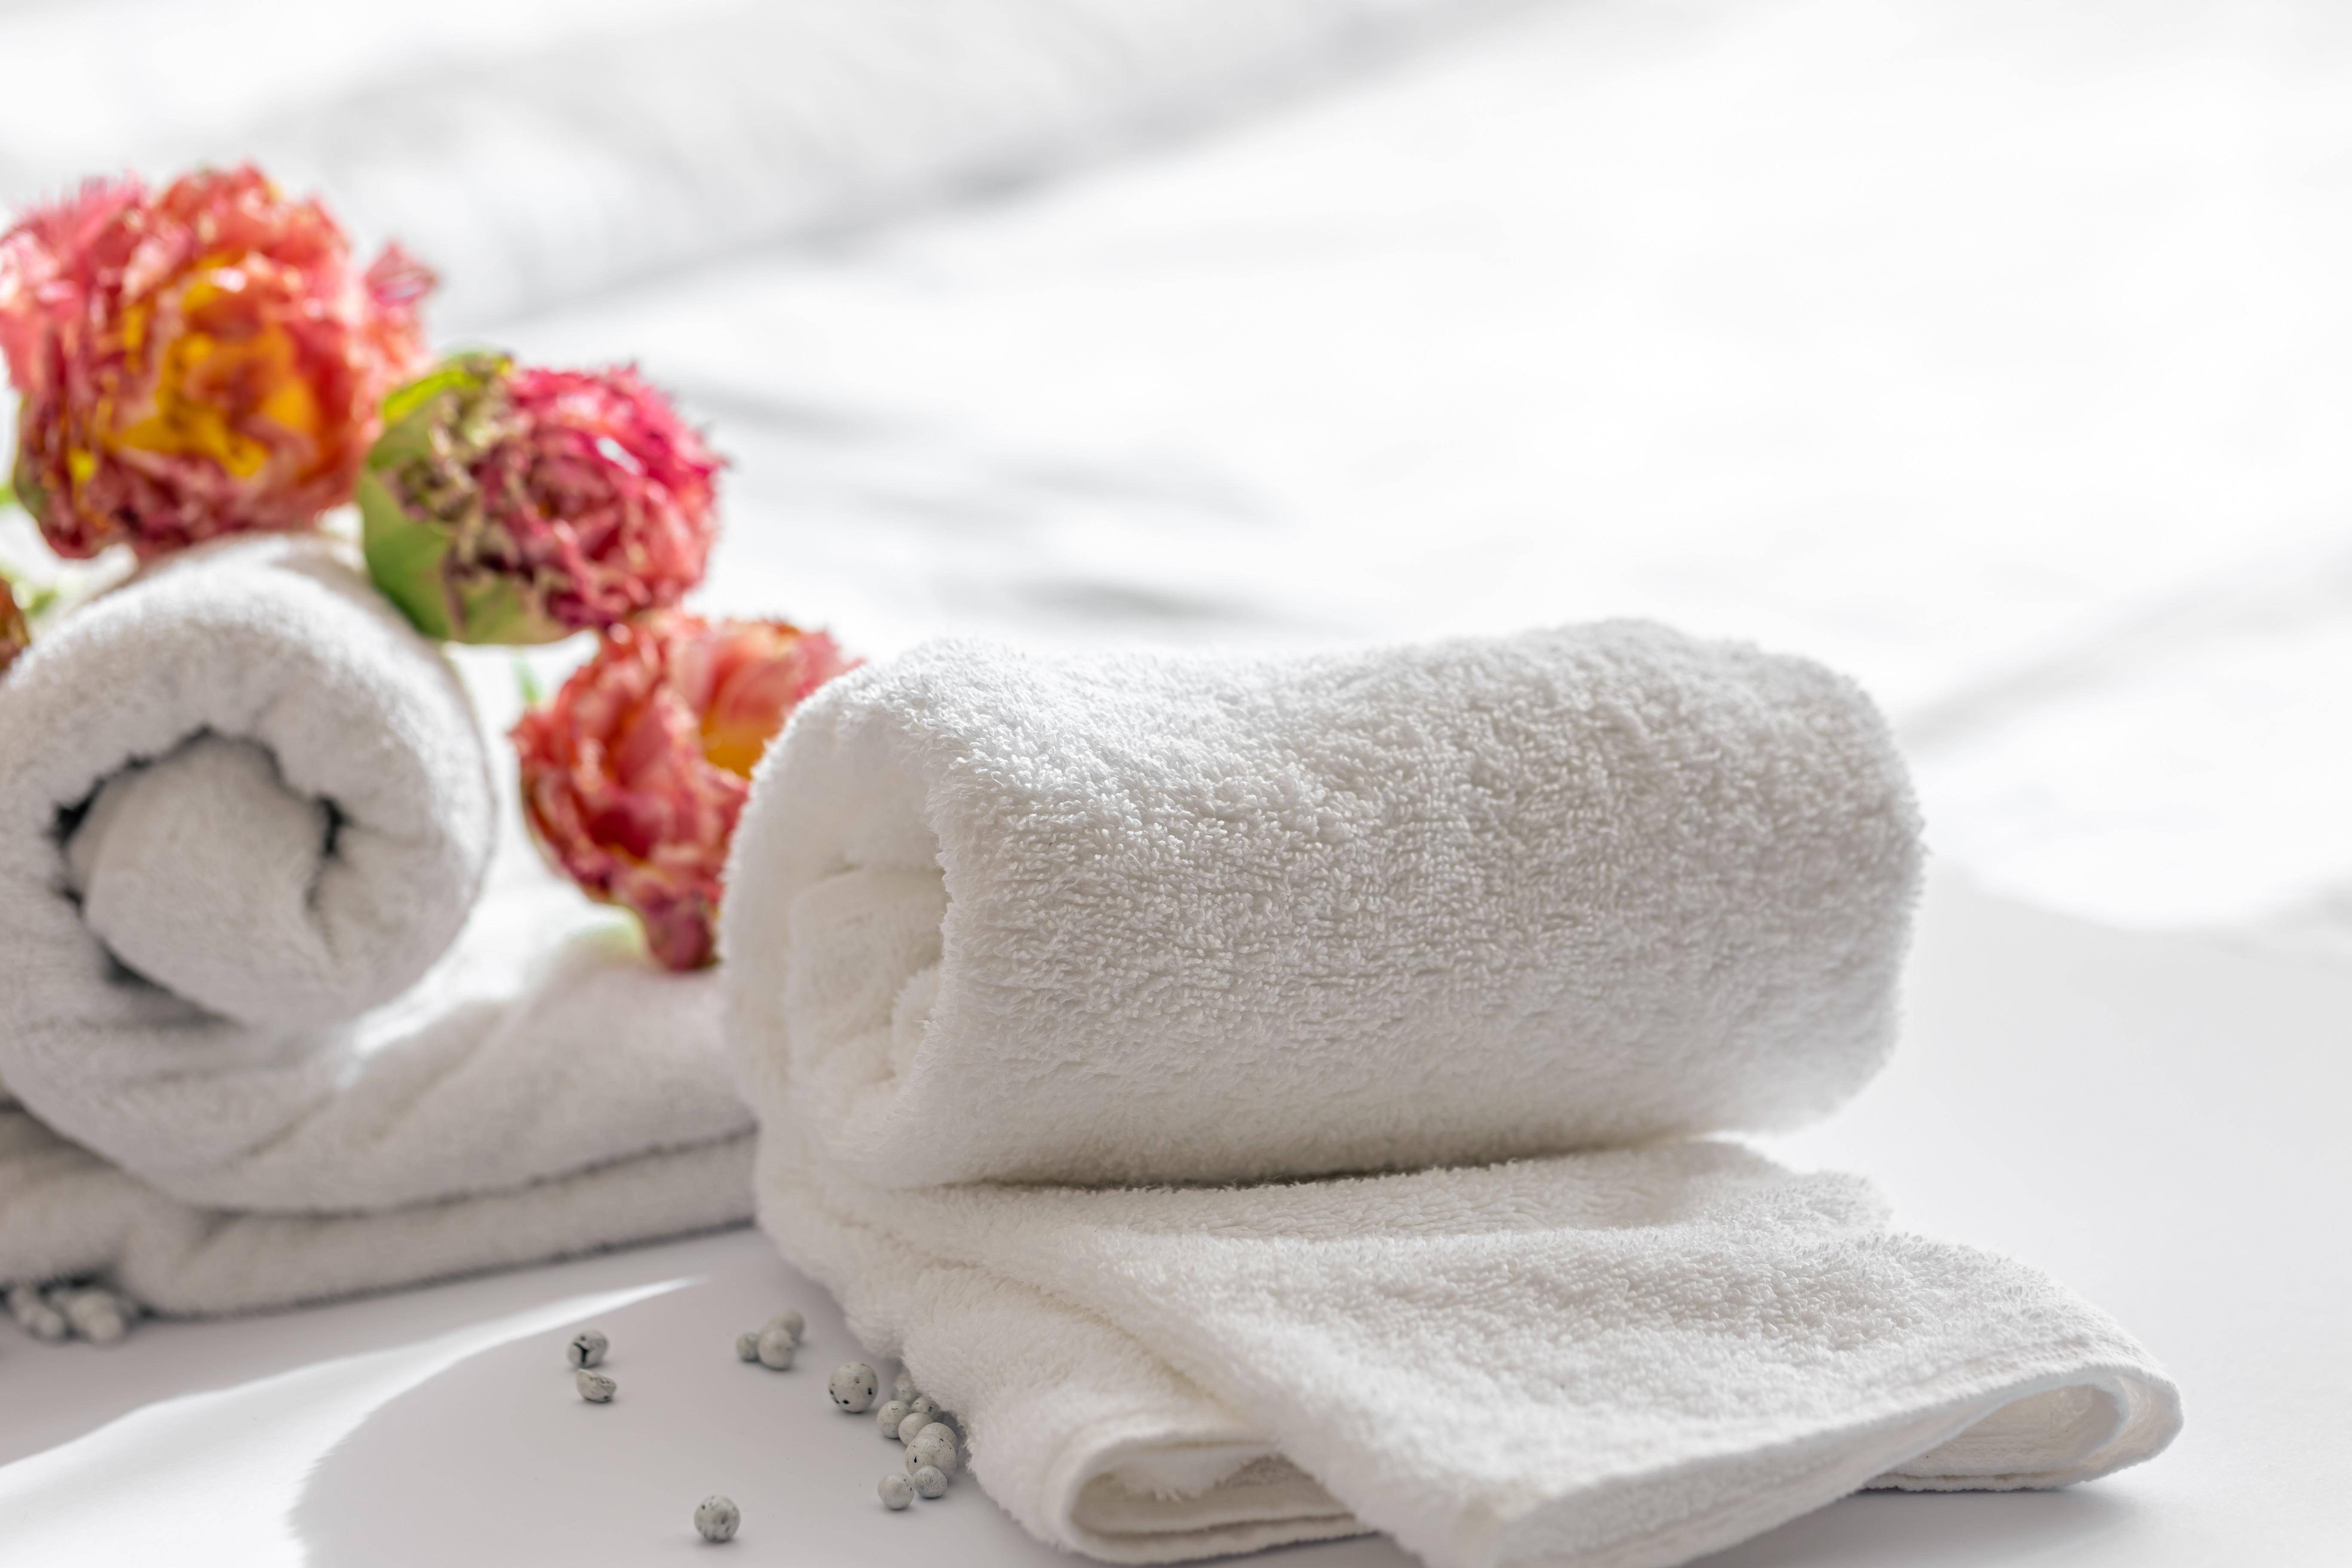 SOHUM Hand Towel - 100% Combed Cotton 150 Gram - 16x24"